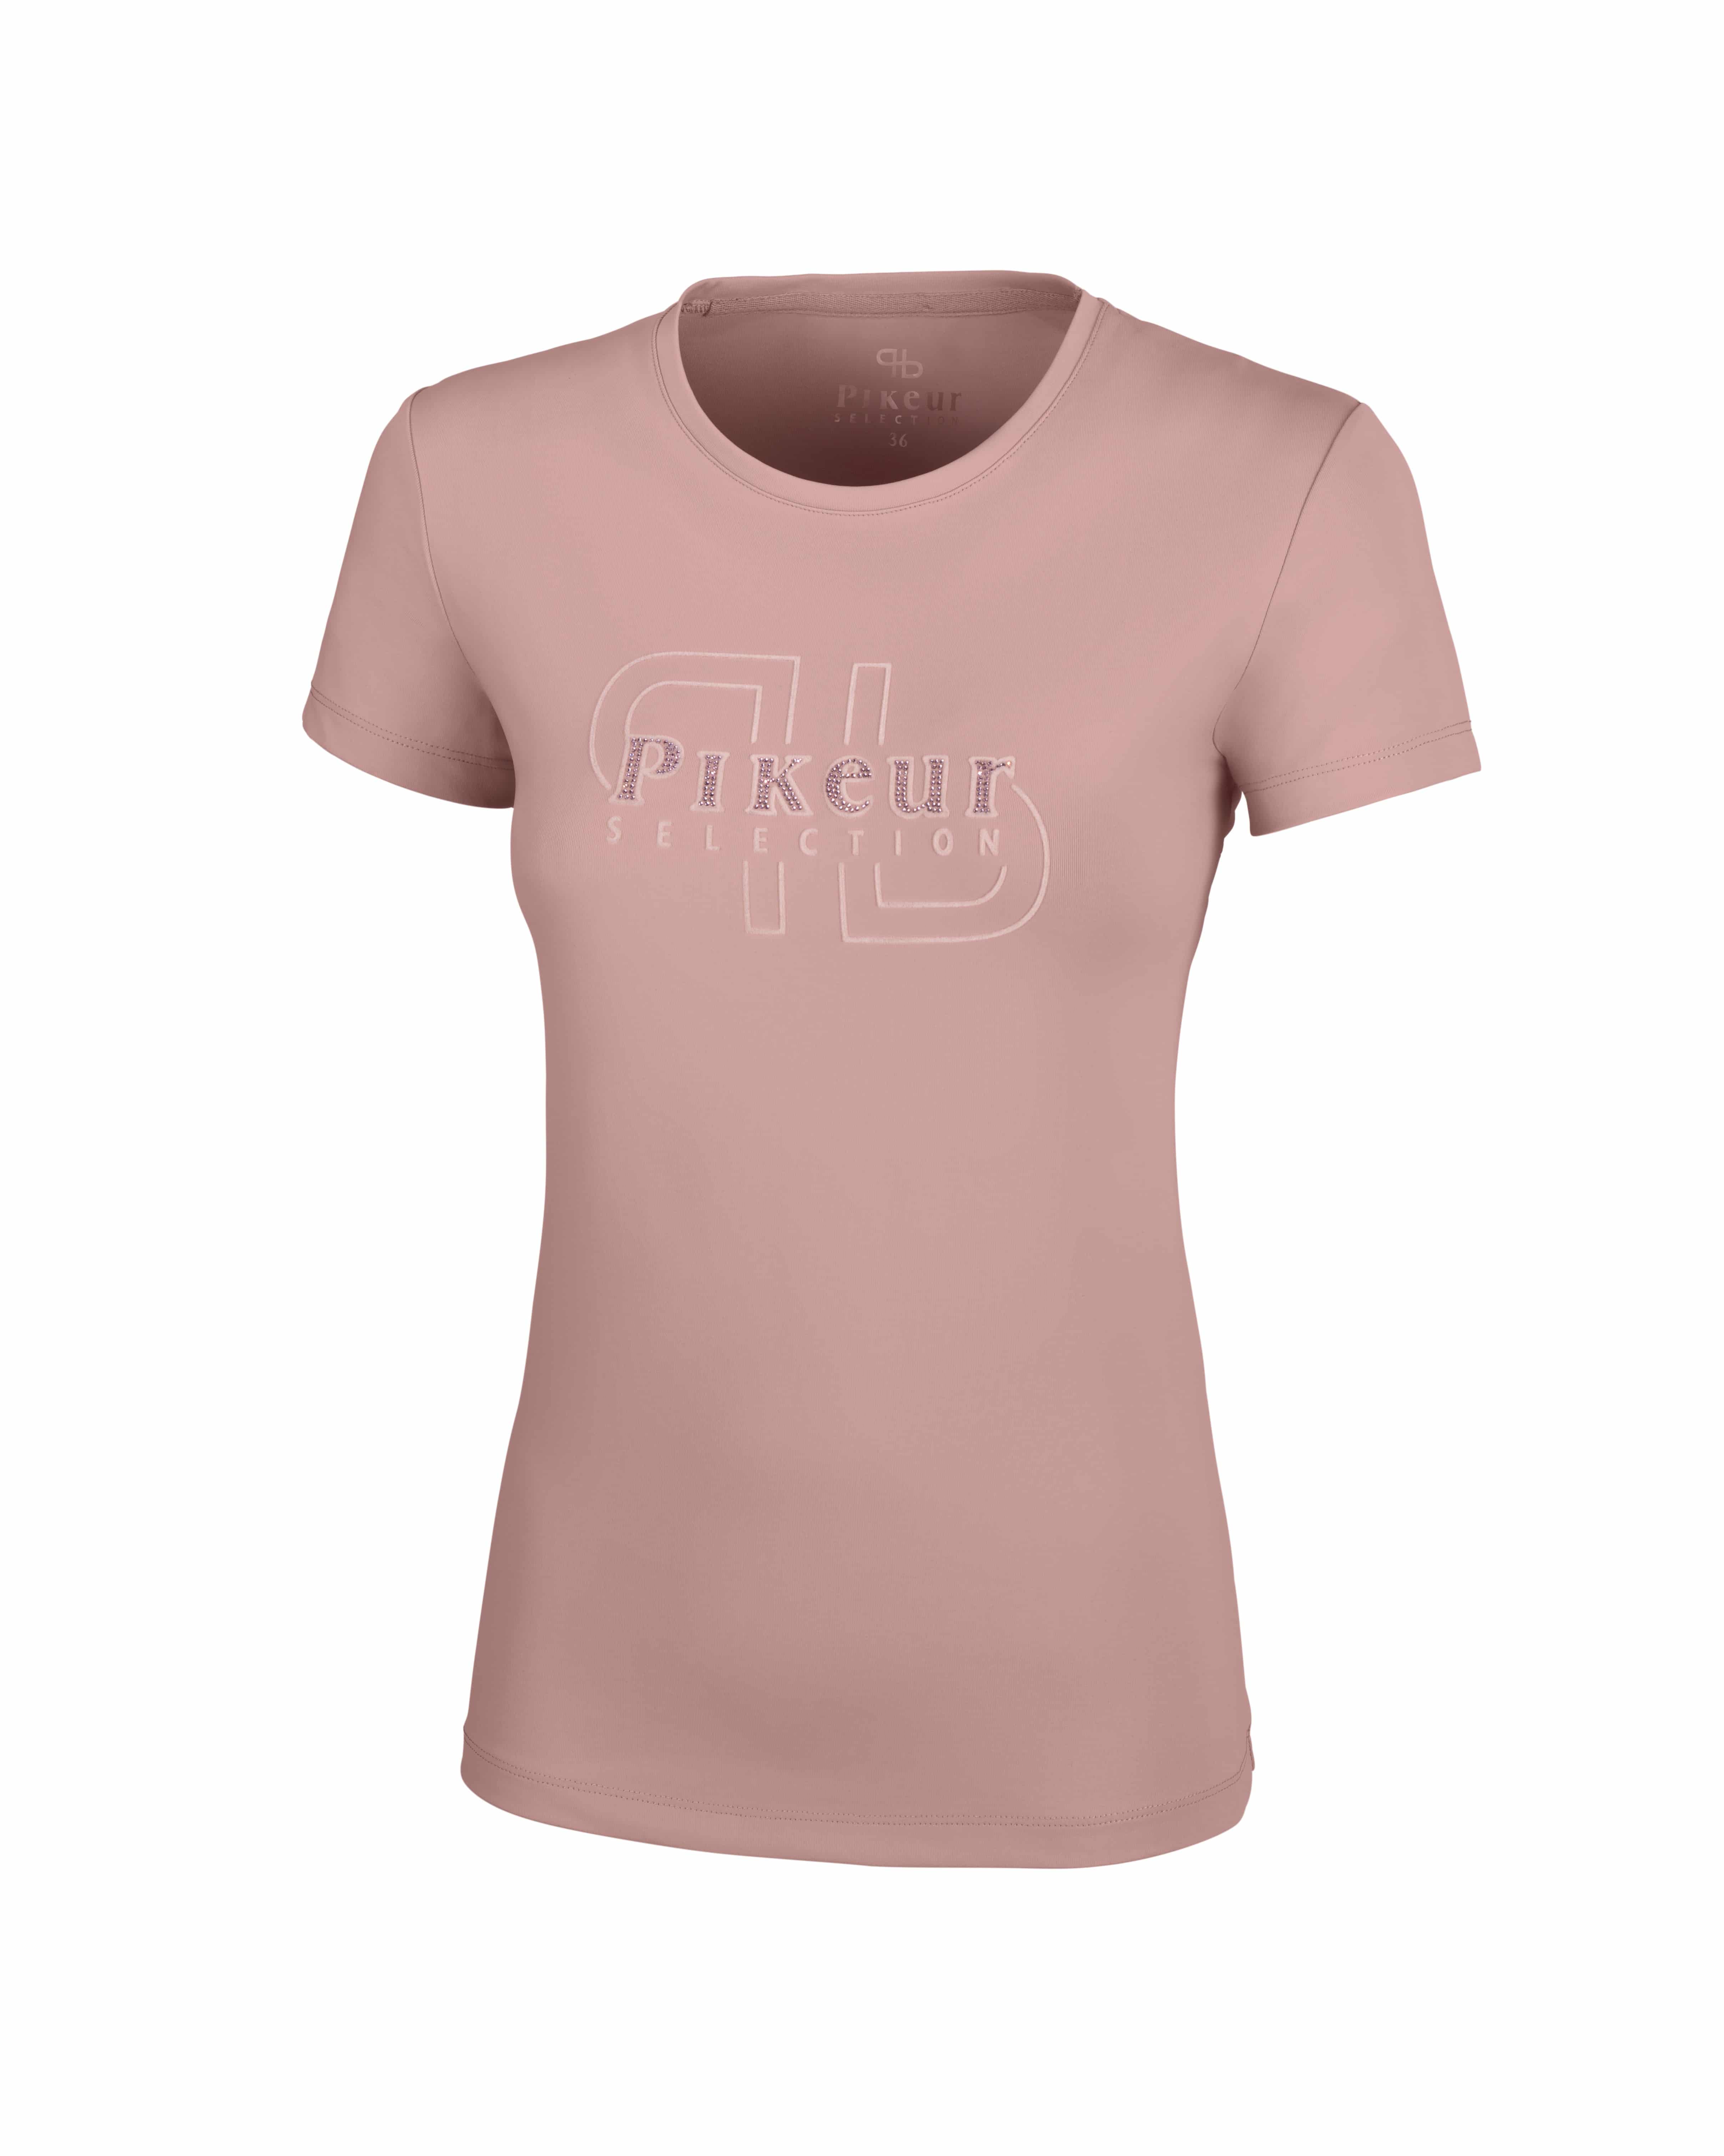 T-Shirt Damen Selection Flock